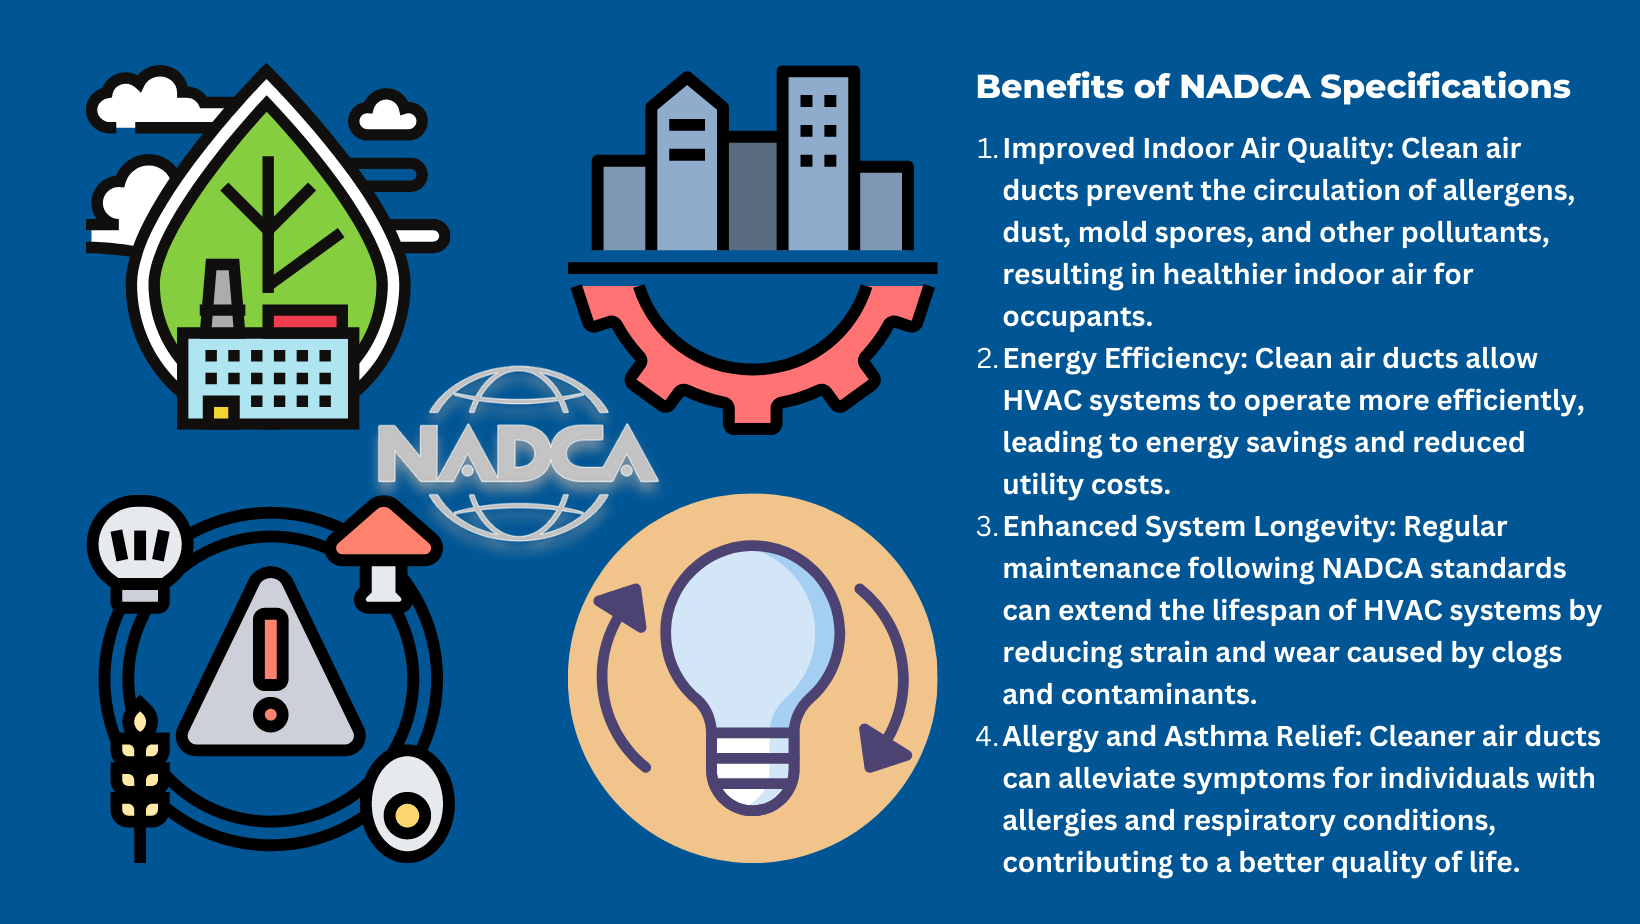 Benefits of NADCA